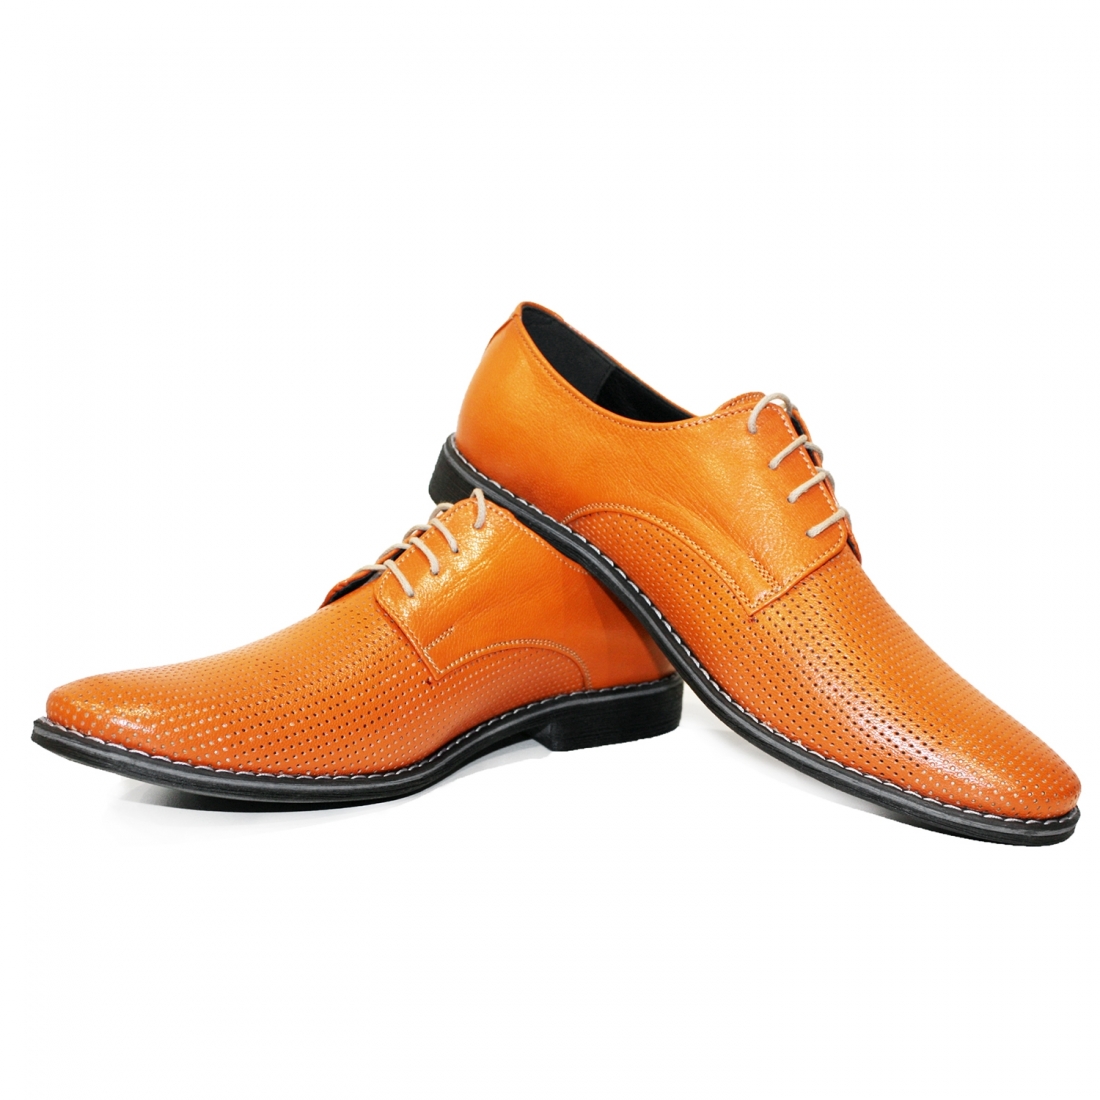 Modello Pomarone - Buty Klasyczne - Handmade Colorful Italian Leather Shoes